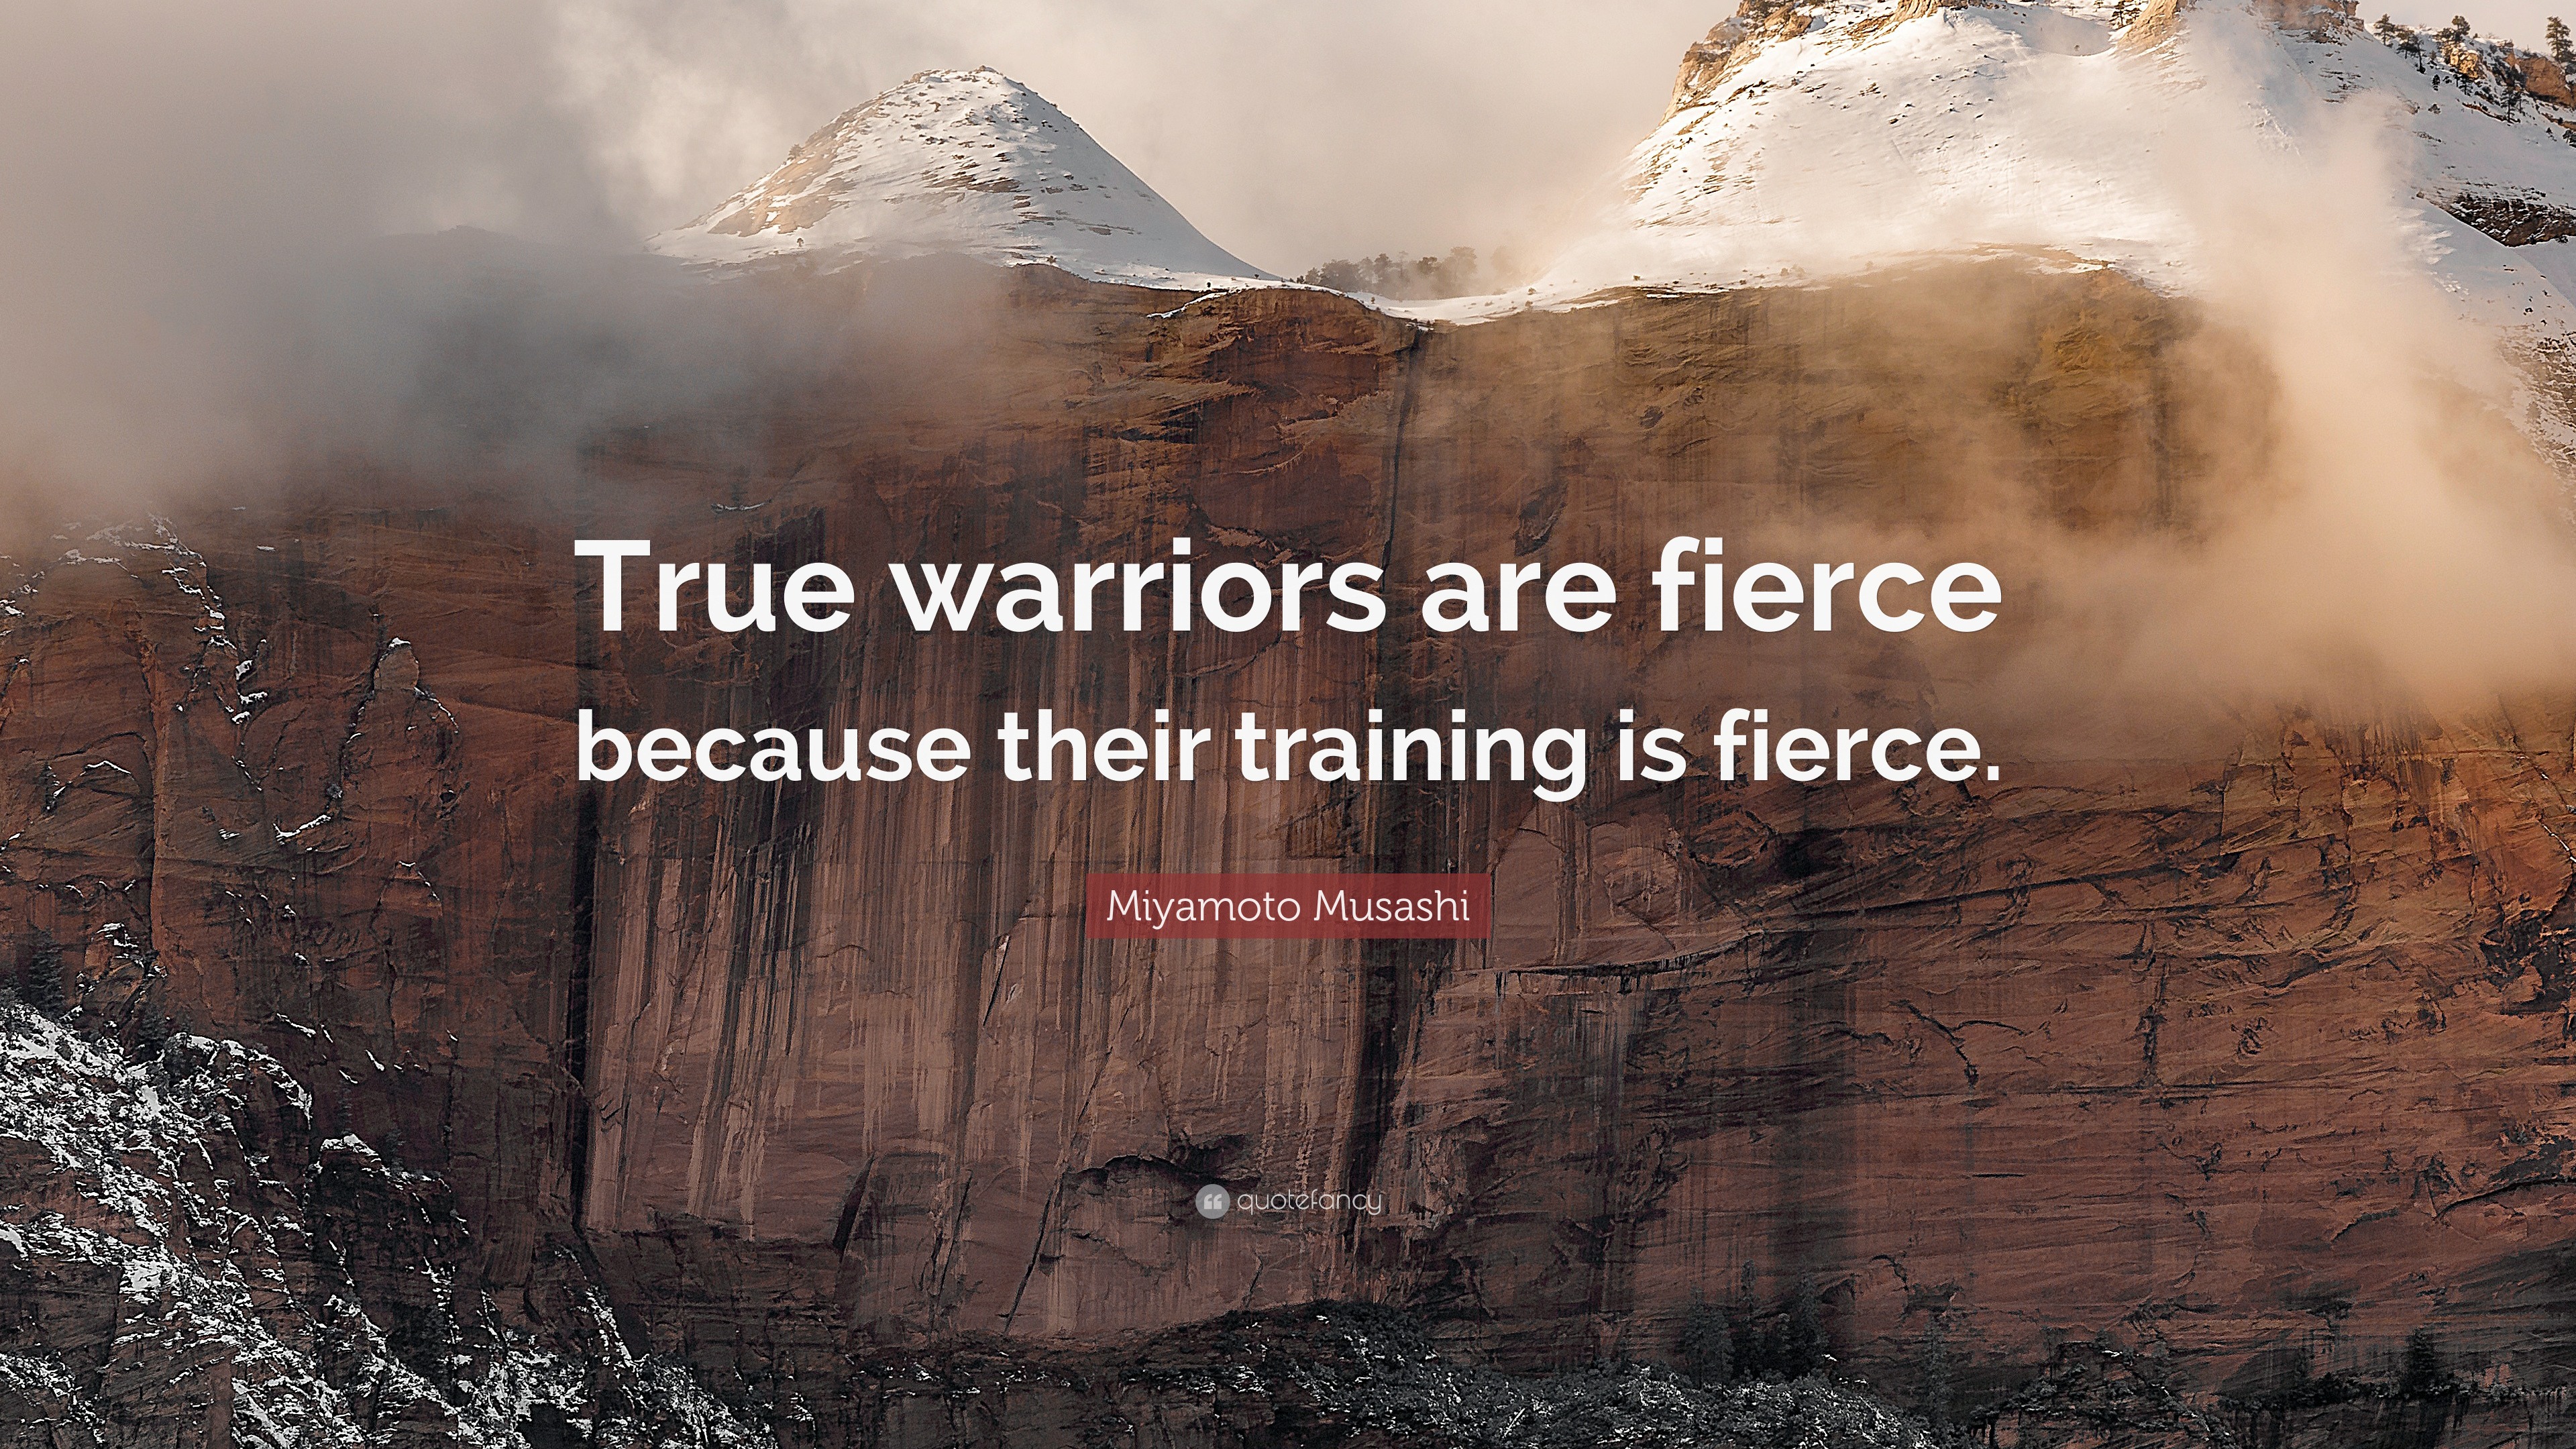 Miyamoto Musashi Quote: “True warriors are fierce because their